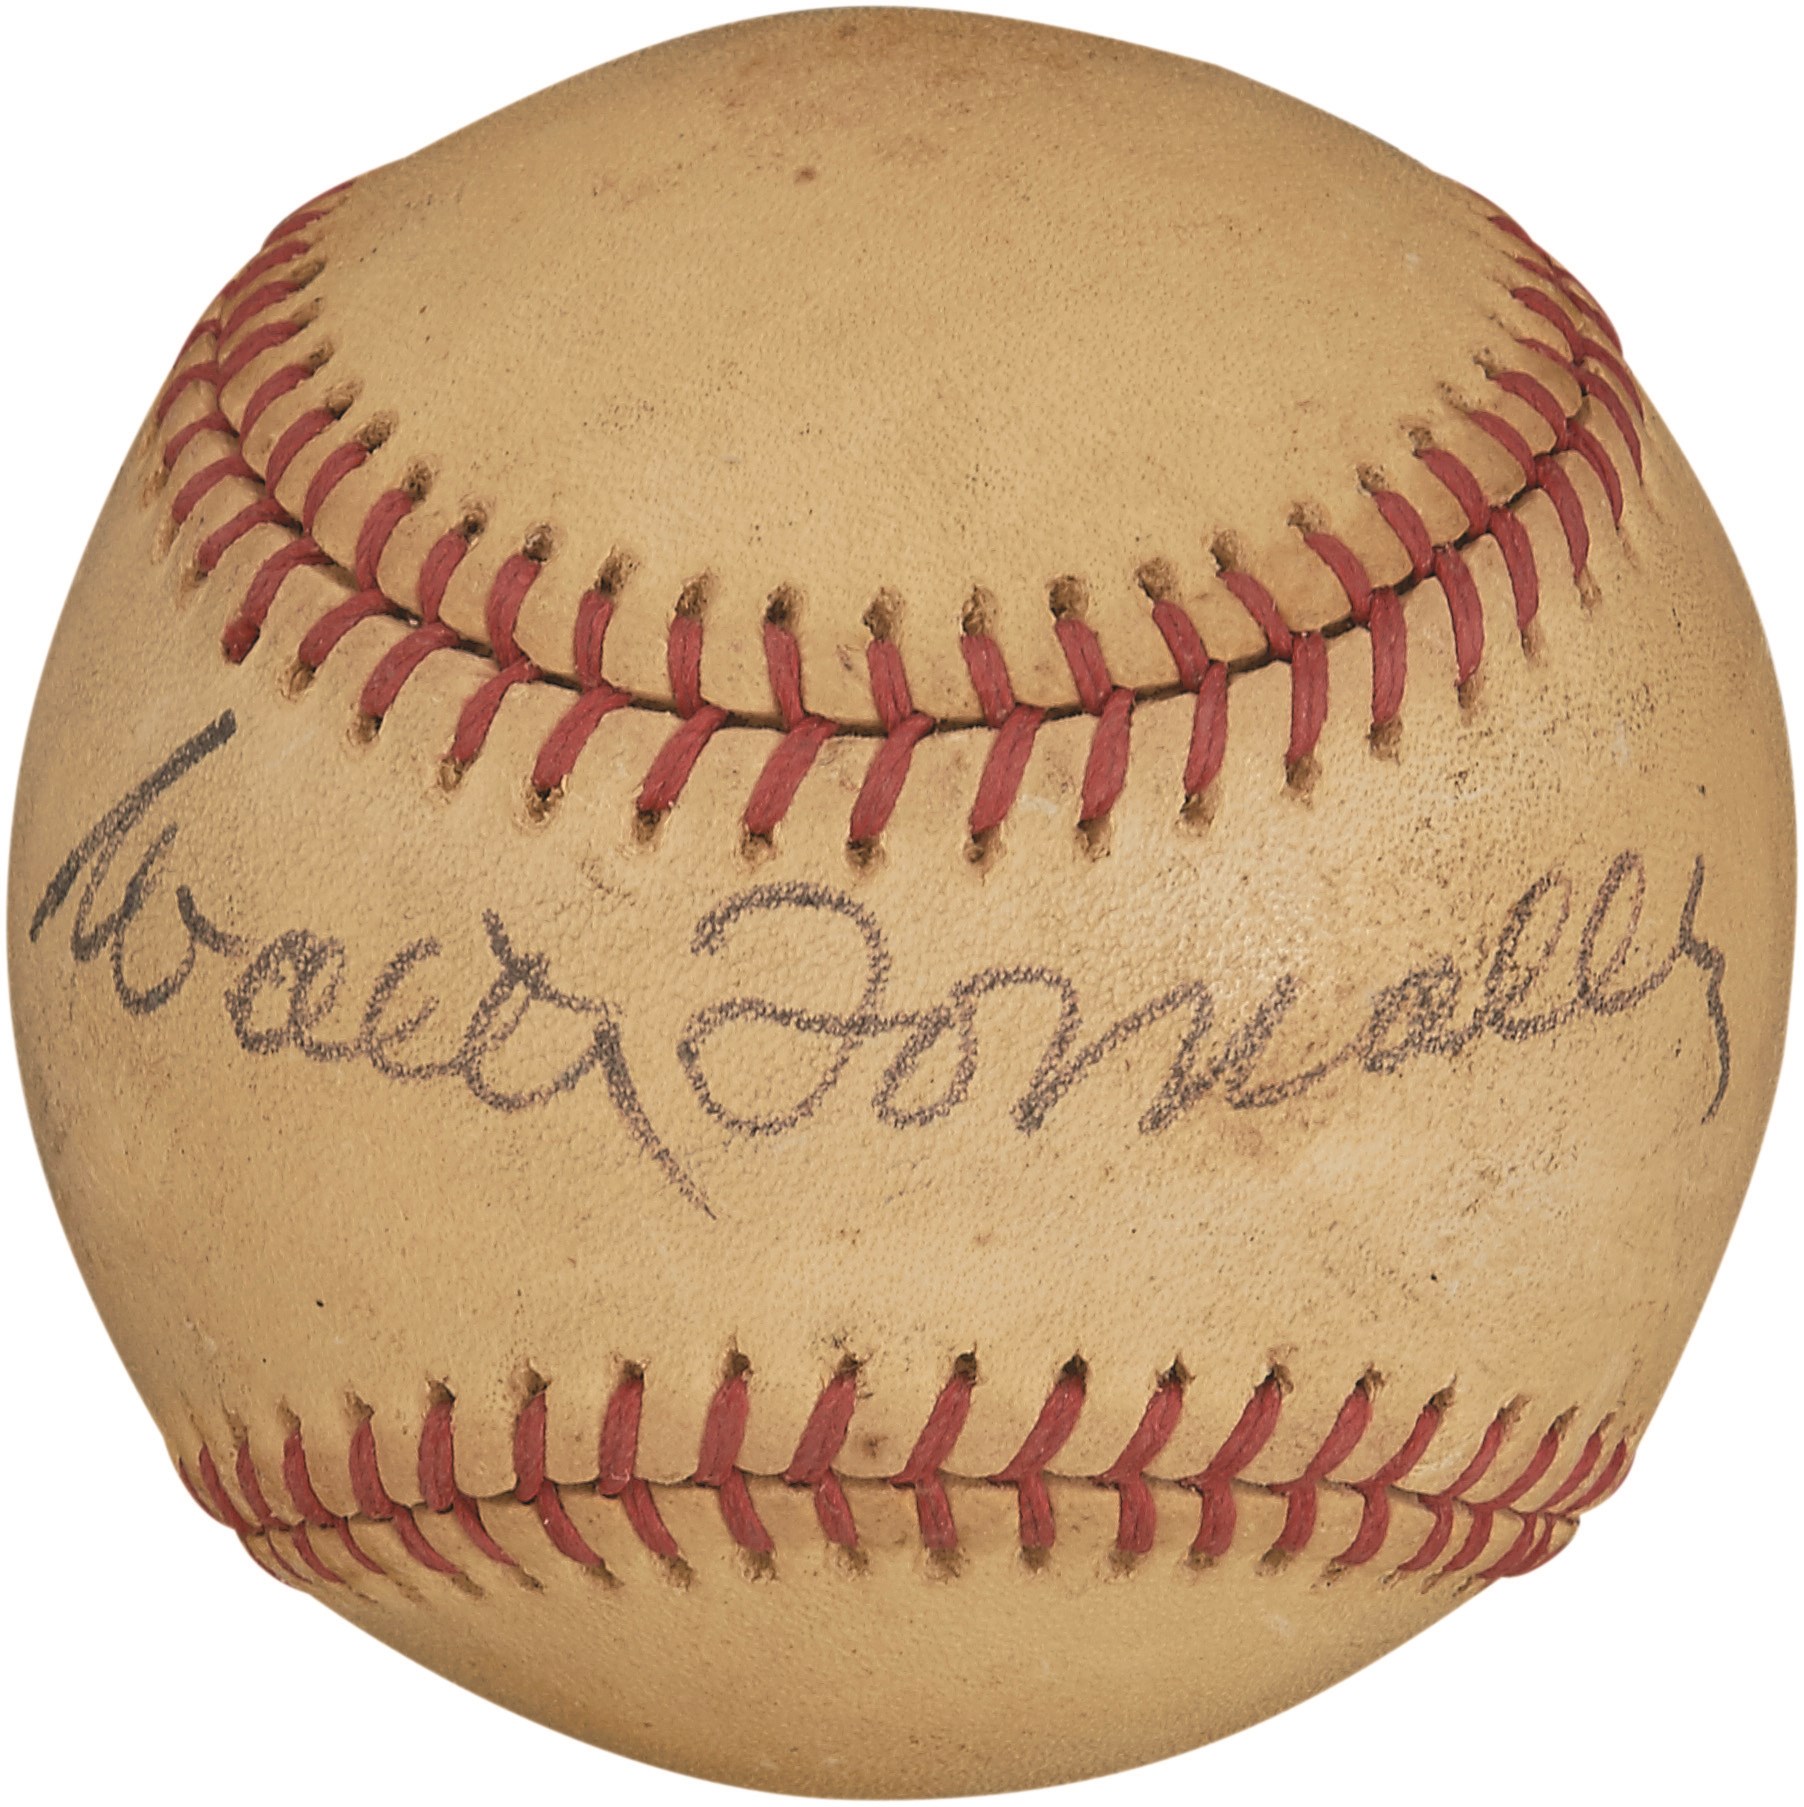 - Walter O'Malley Single-Signed Baseball (PSA)